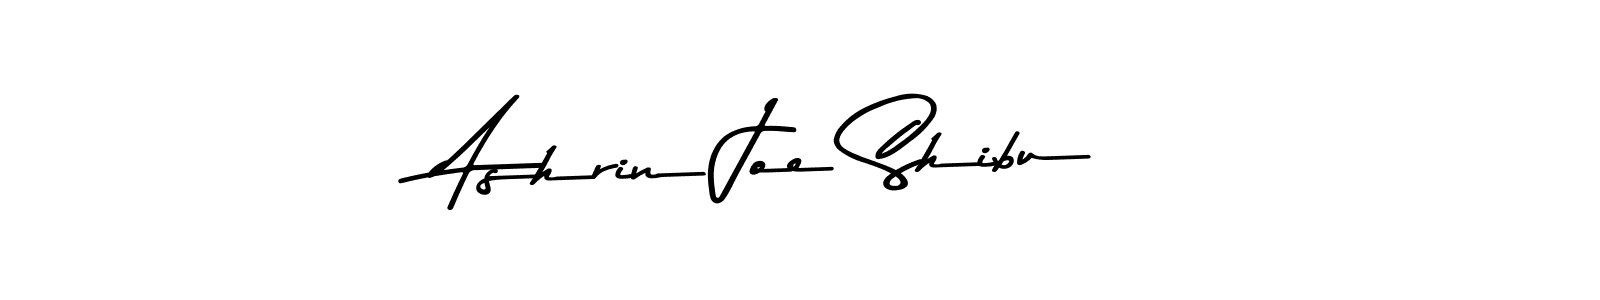 How to Draw Ashrin Joe Shibu signature style? Asem Kandis PERSONAL USE is a latest design signature styles for name Ashrin Joe Shibu. Ashrin Joe Shibu signature style 9 images and pictures png